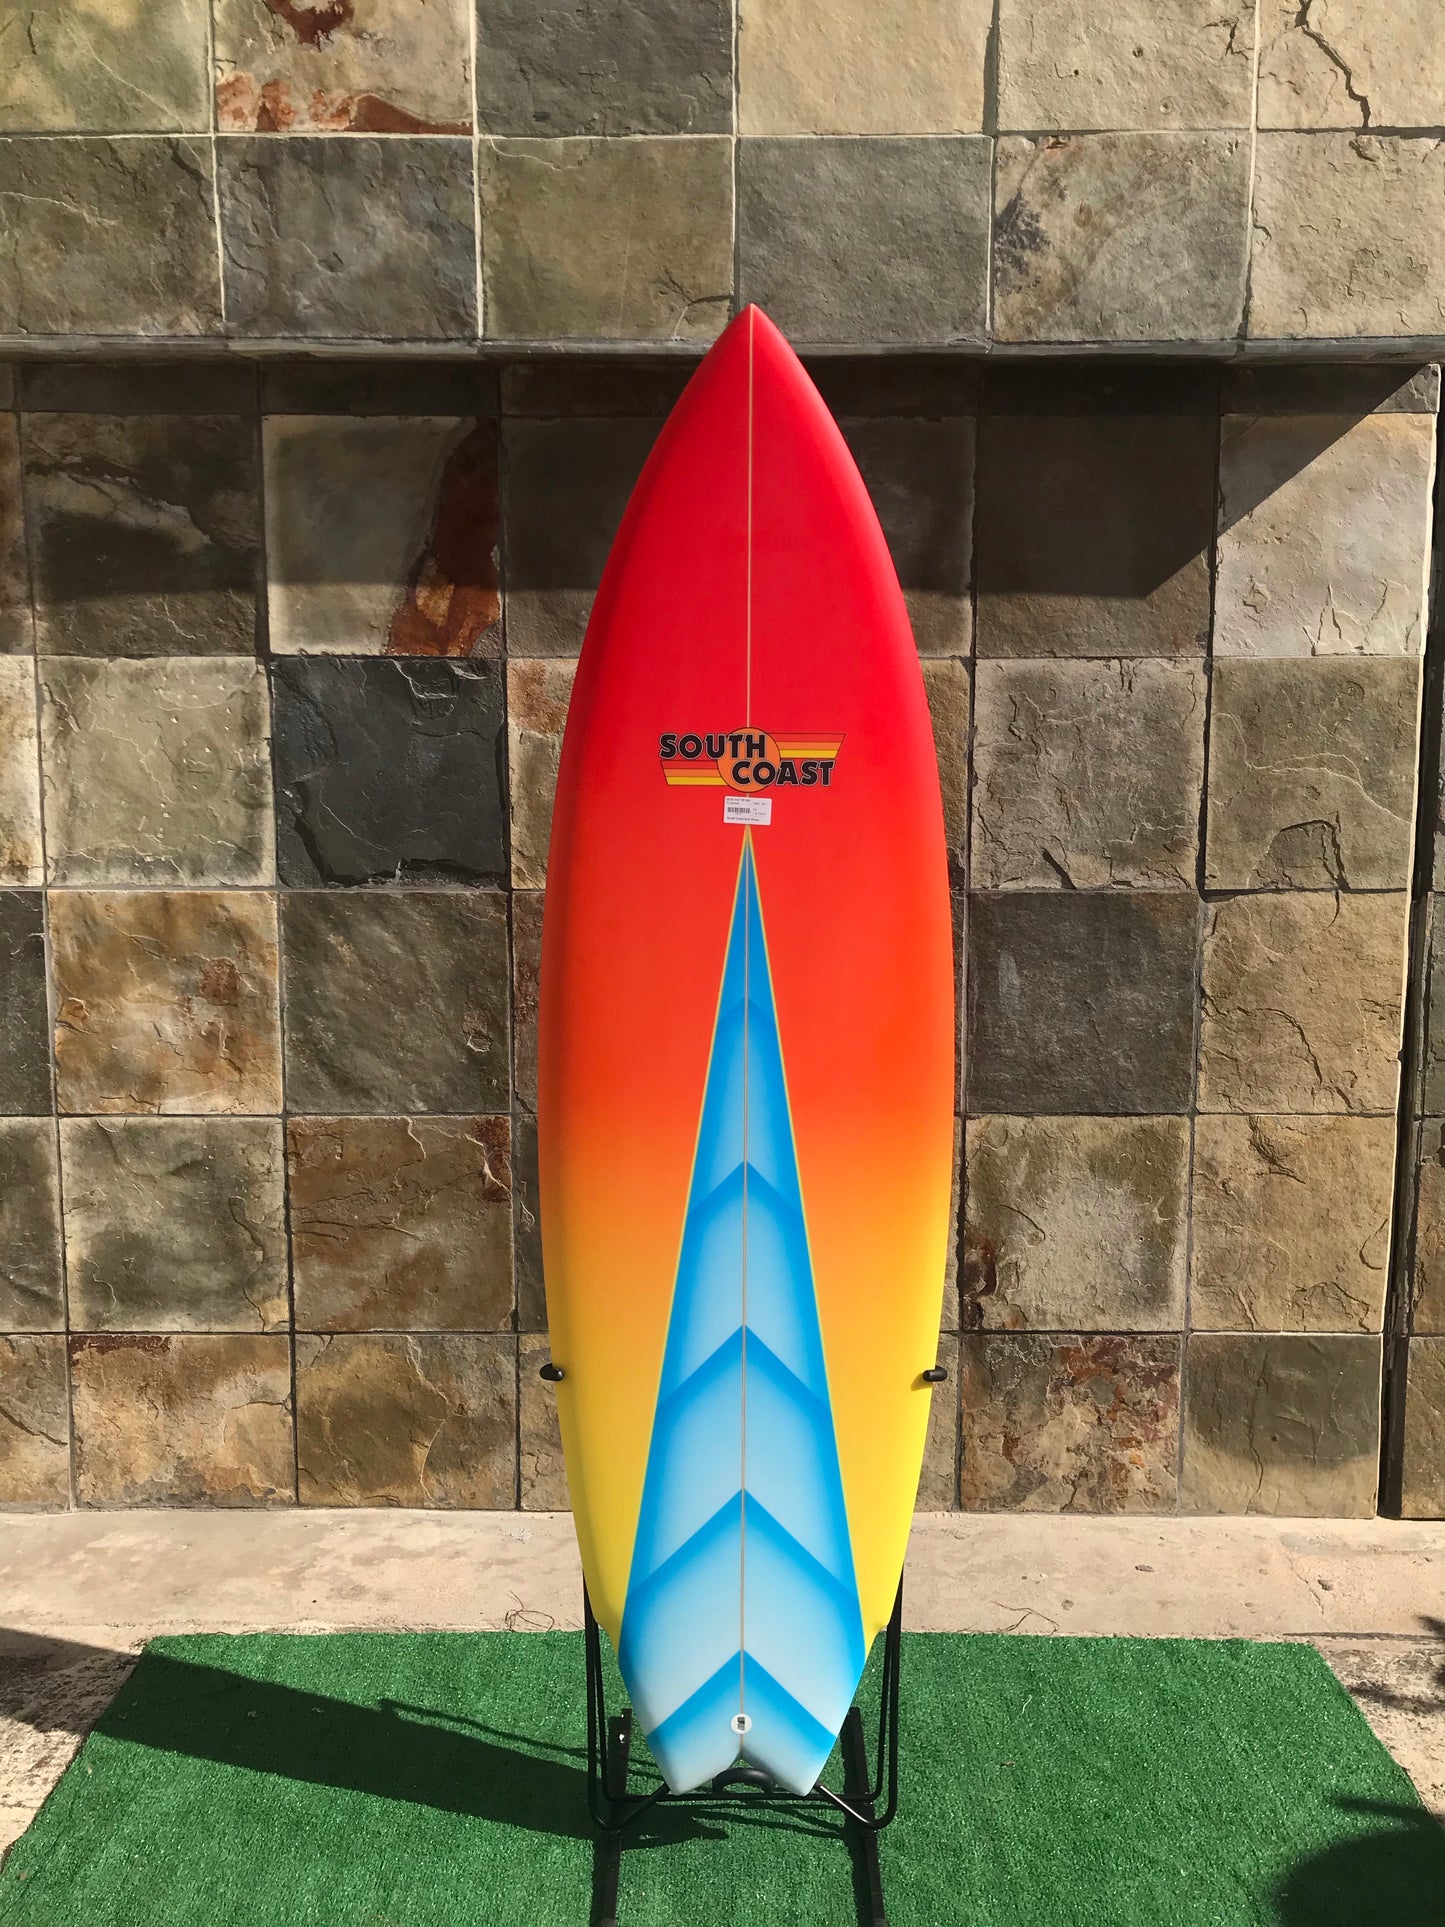 SOUTH COAST 72 REWIND TWIN FIN SURFBOARD 6'0”